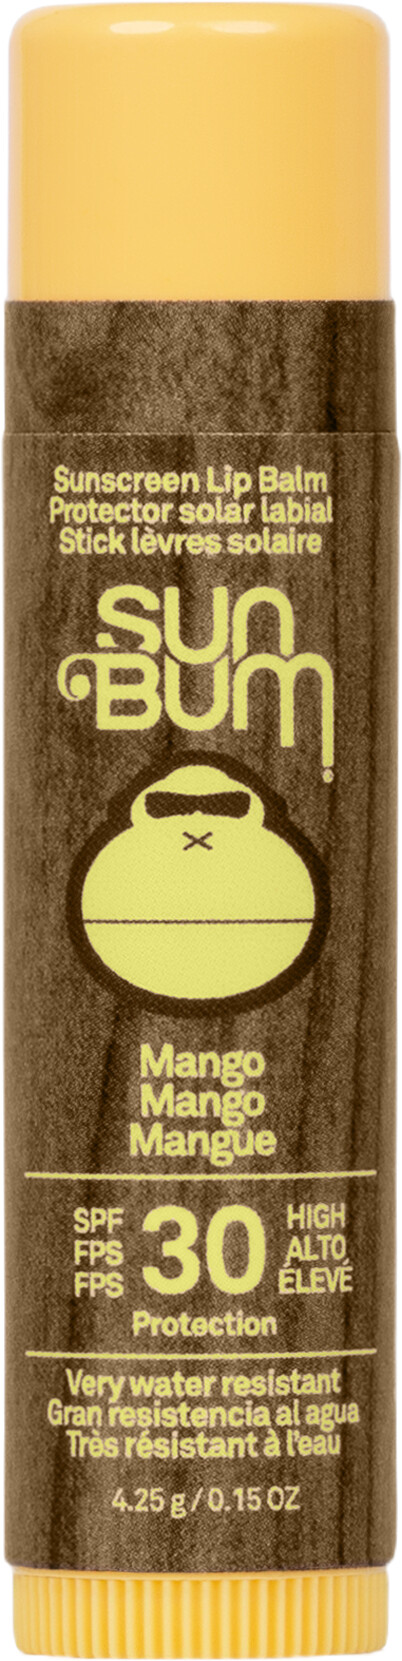 Sun Bum Original Lip Balm SPF30 4.25g Mango